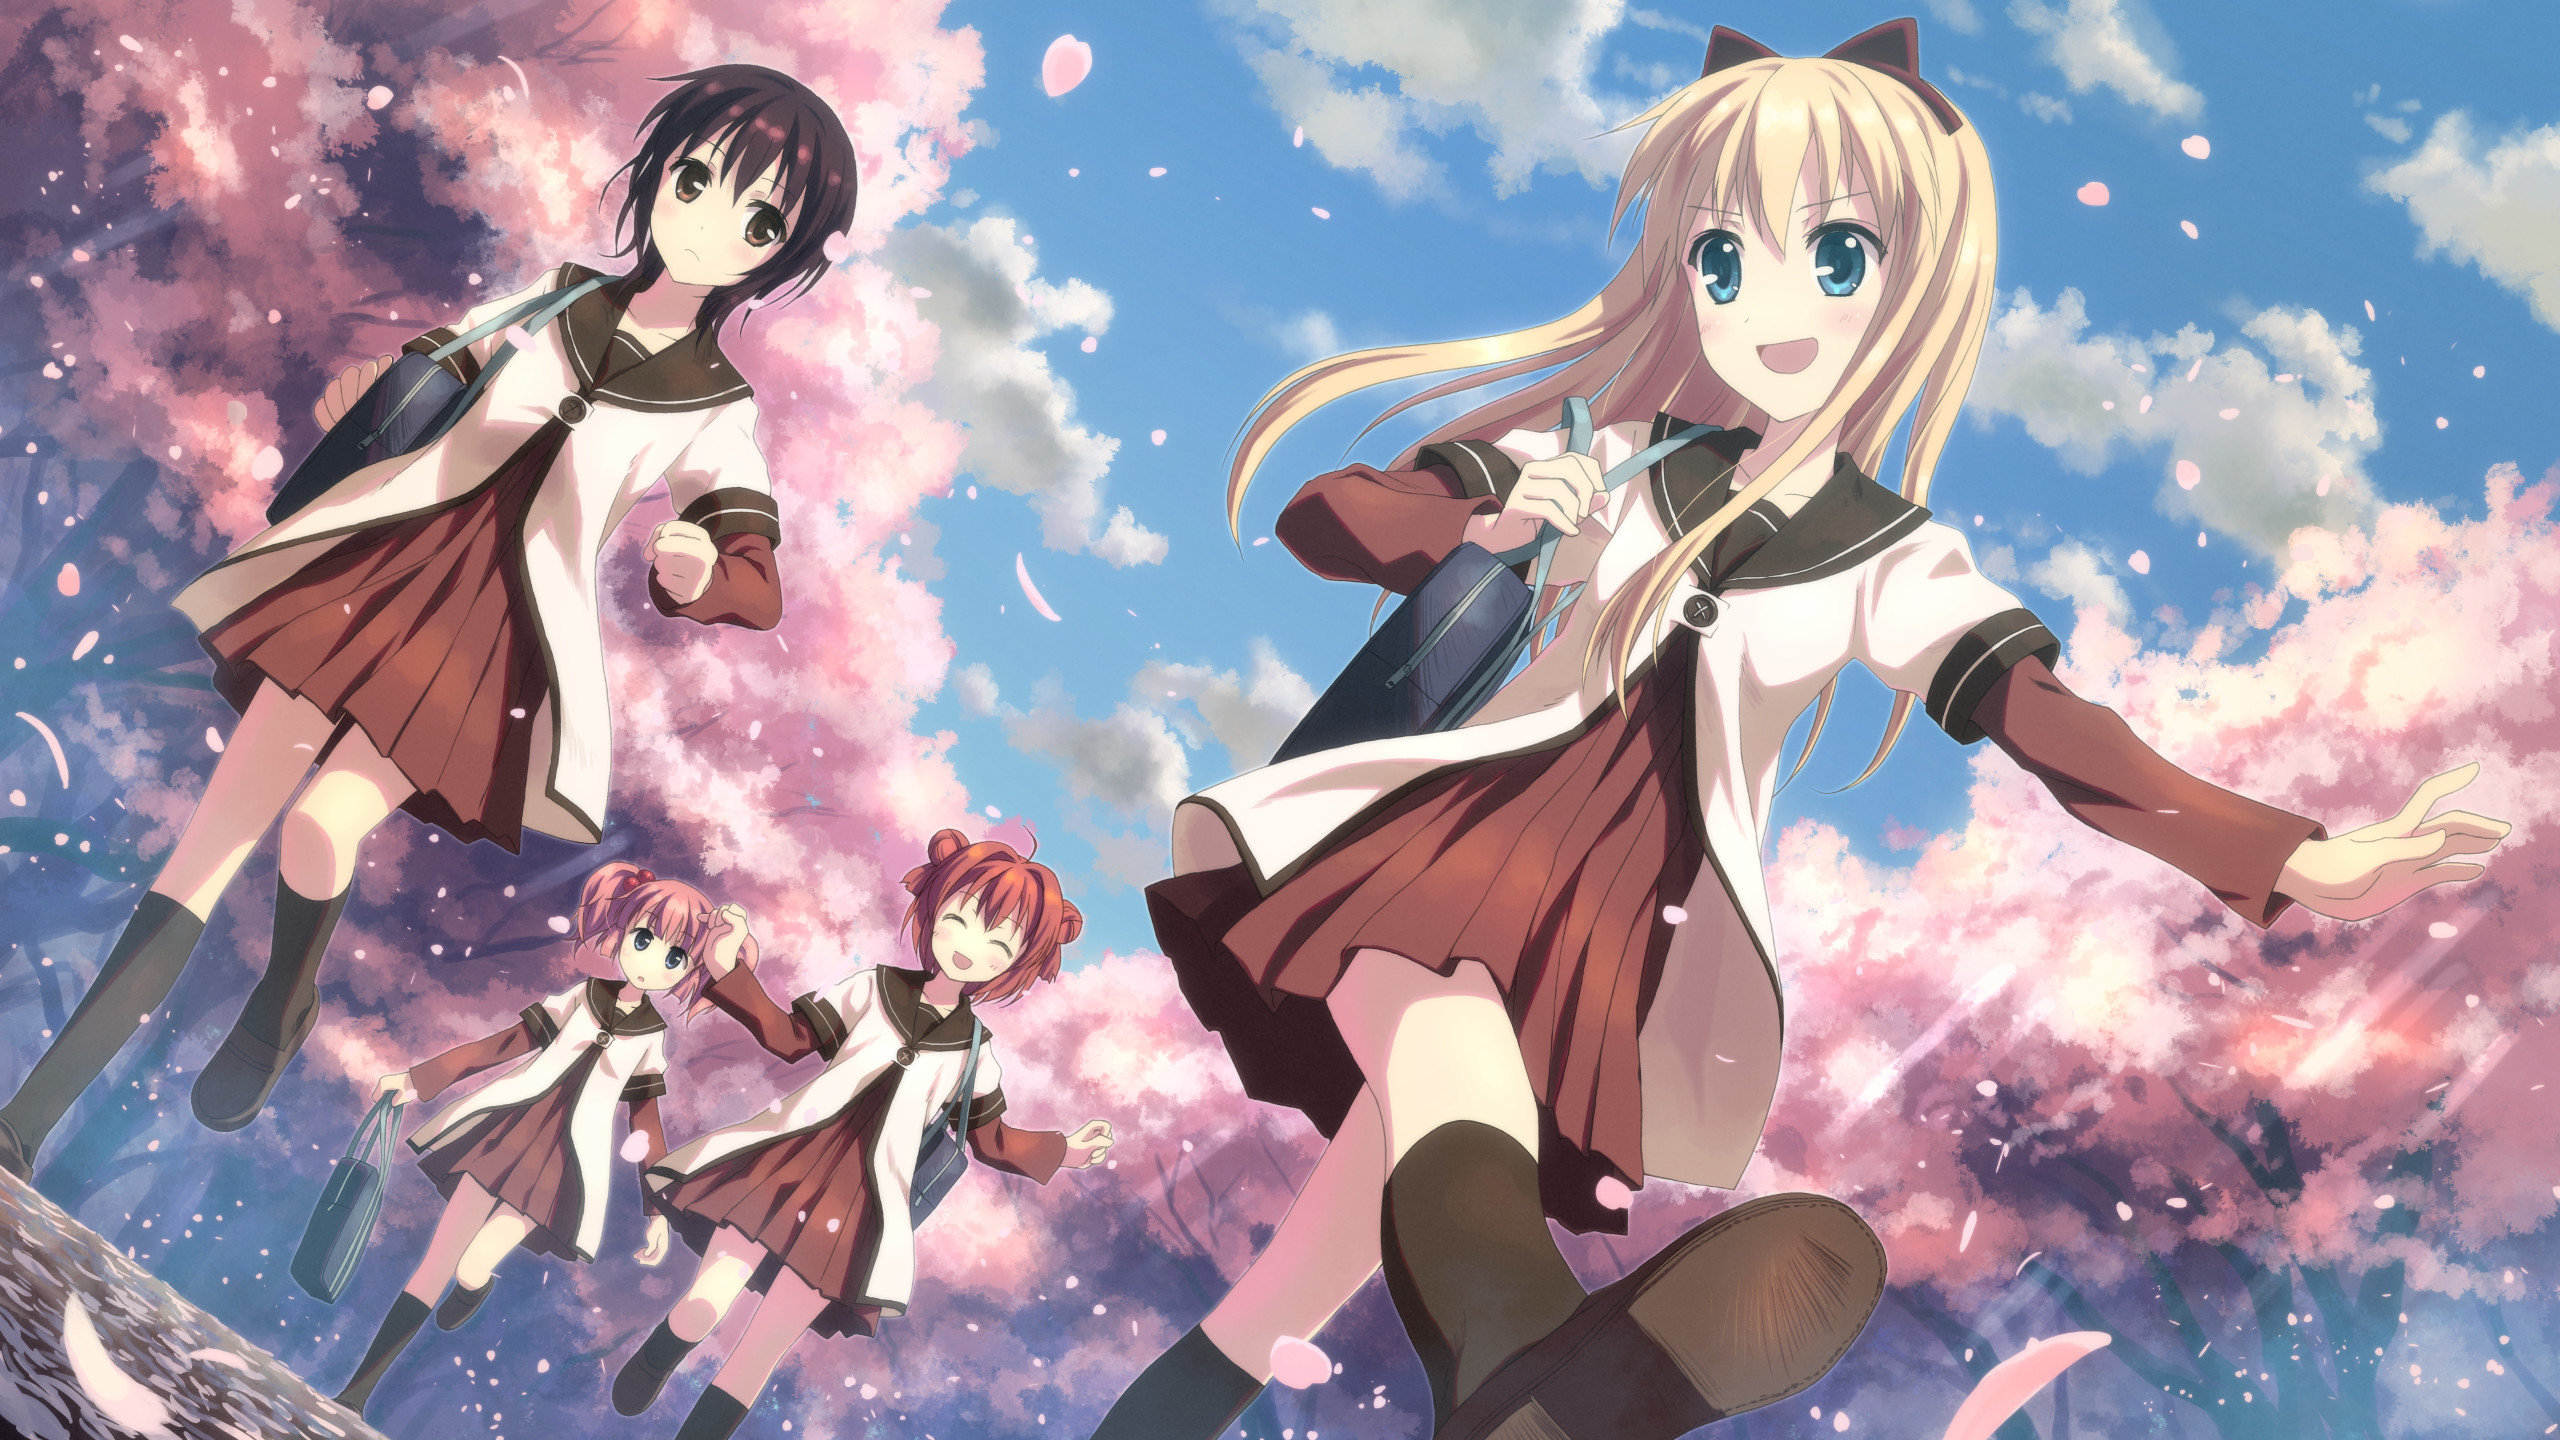 Anime Girl Wallpapers 2560x1440 Desktop Backgrounds